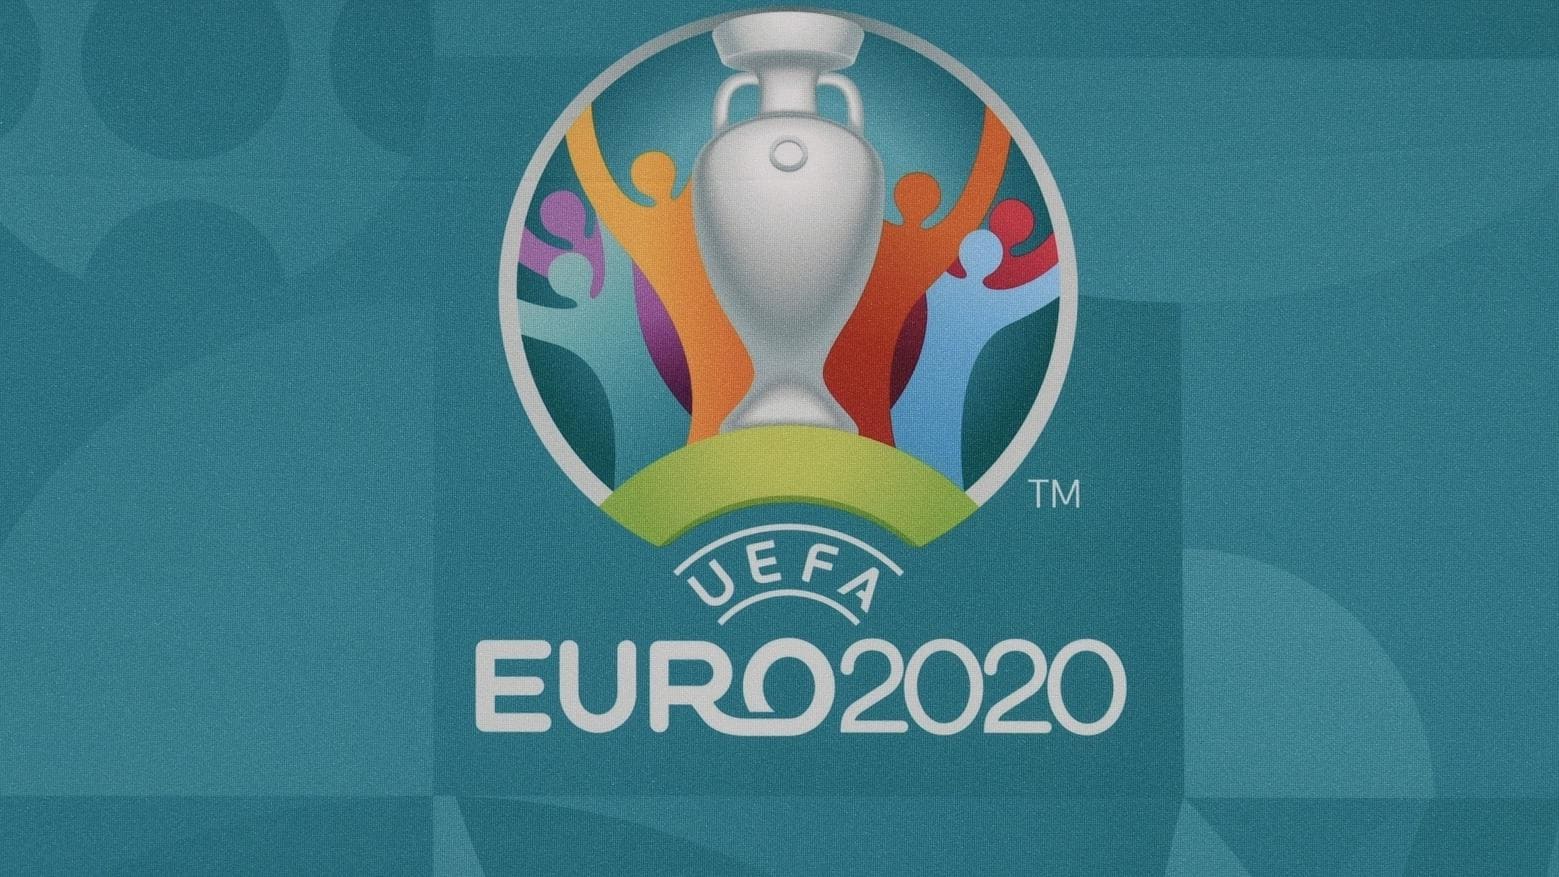 UEFA EURO 2020 to keep its name | UEFA EURO 2020 | UEFA.com